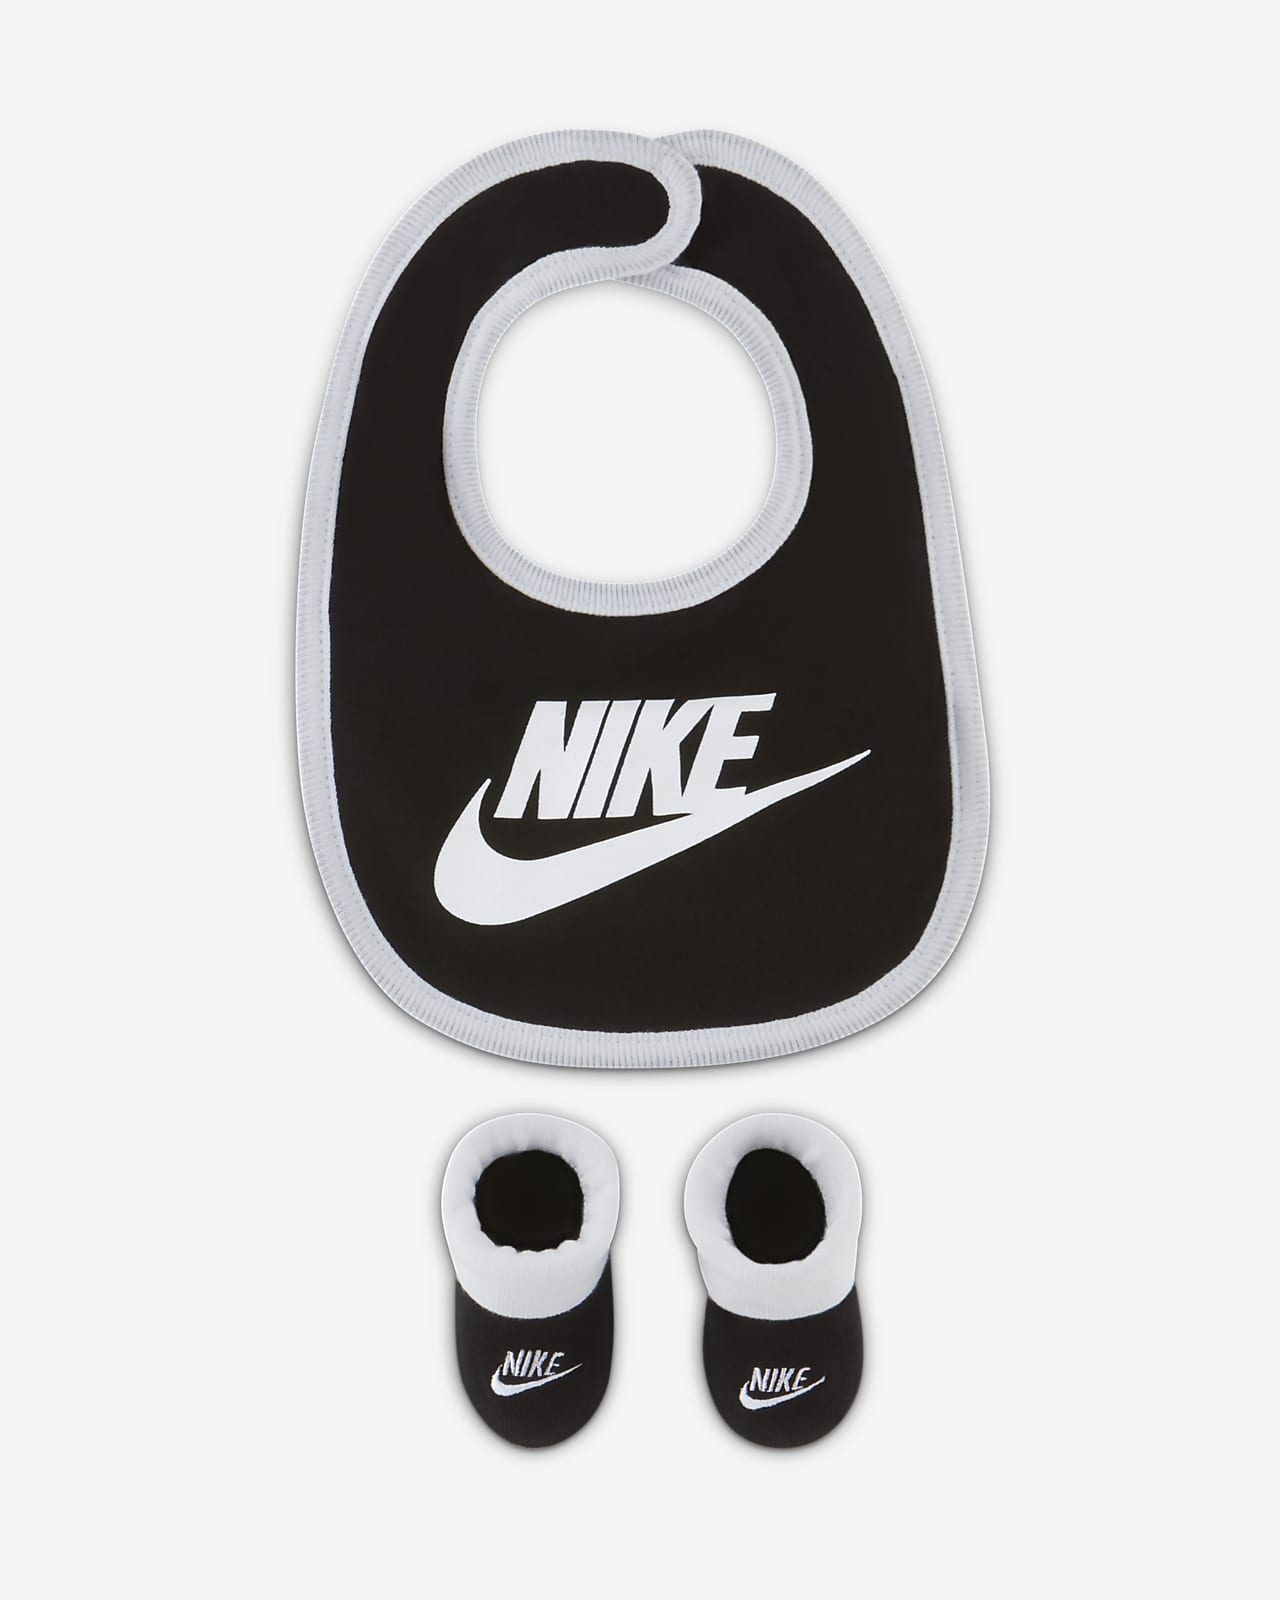 Nike Baby (0-6M) Bib and Booties Set.